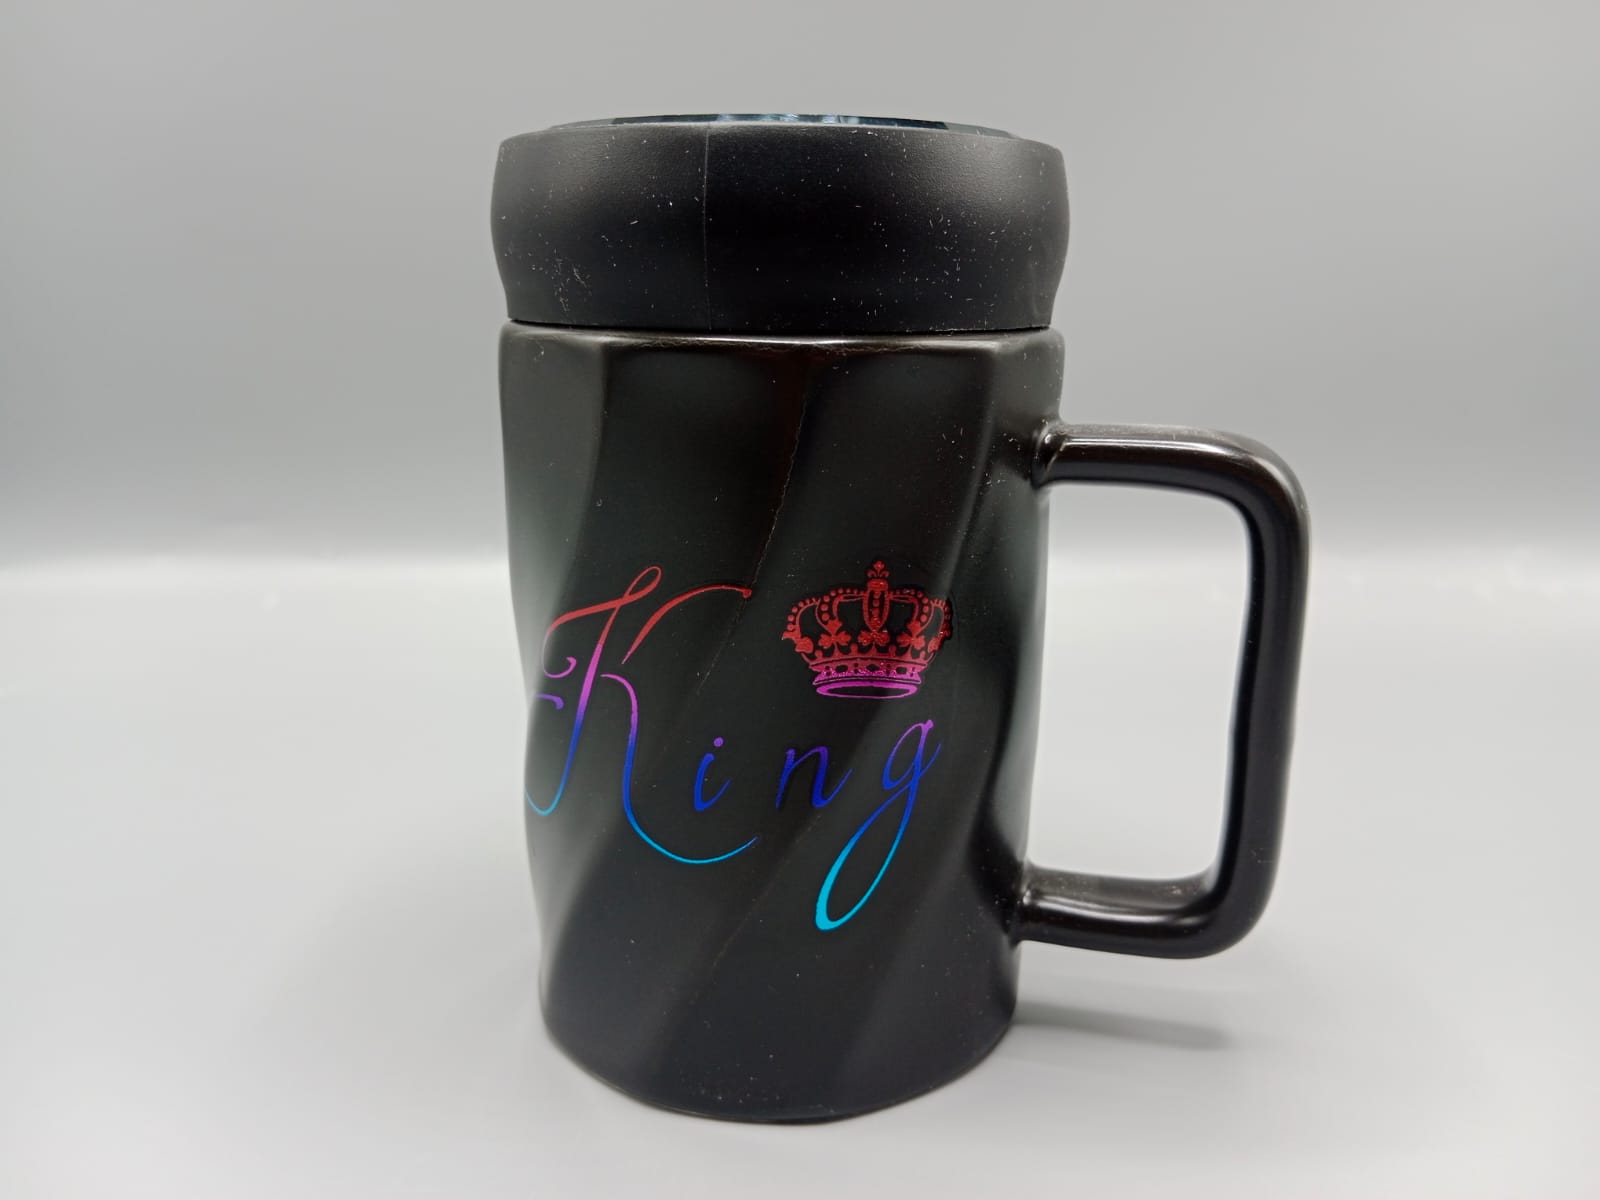 King Ceramic Coffee Mug With Mirrored Lid Black (G-22)